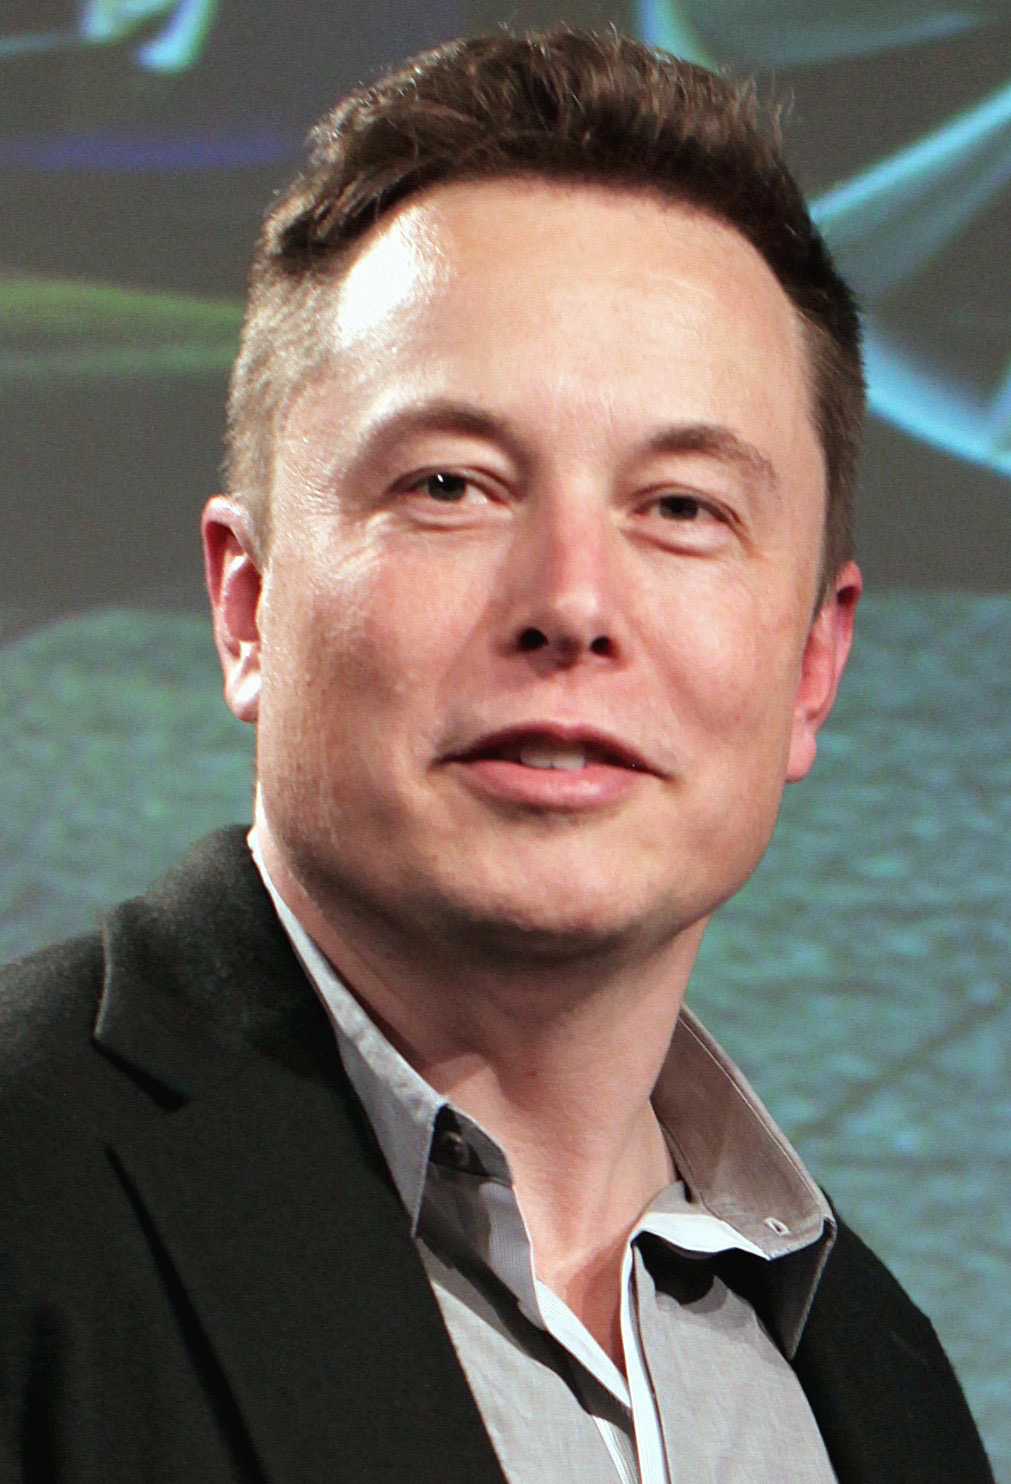 Profile pic of Elon Musk